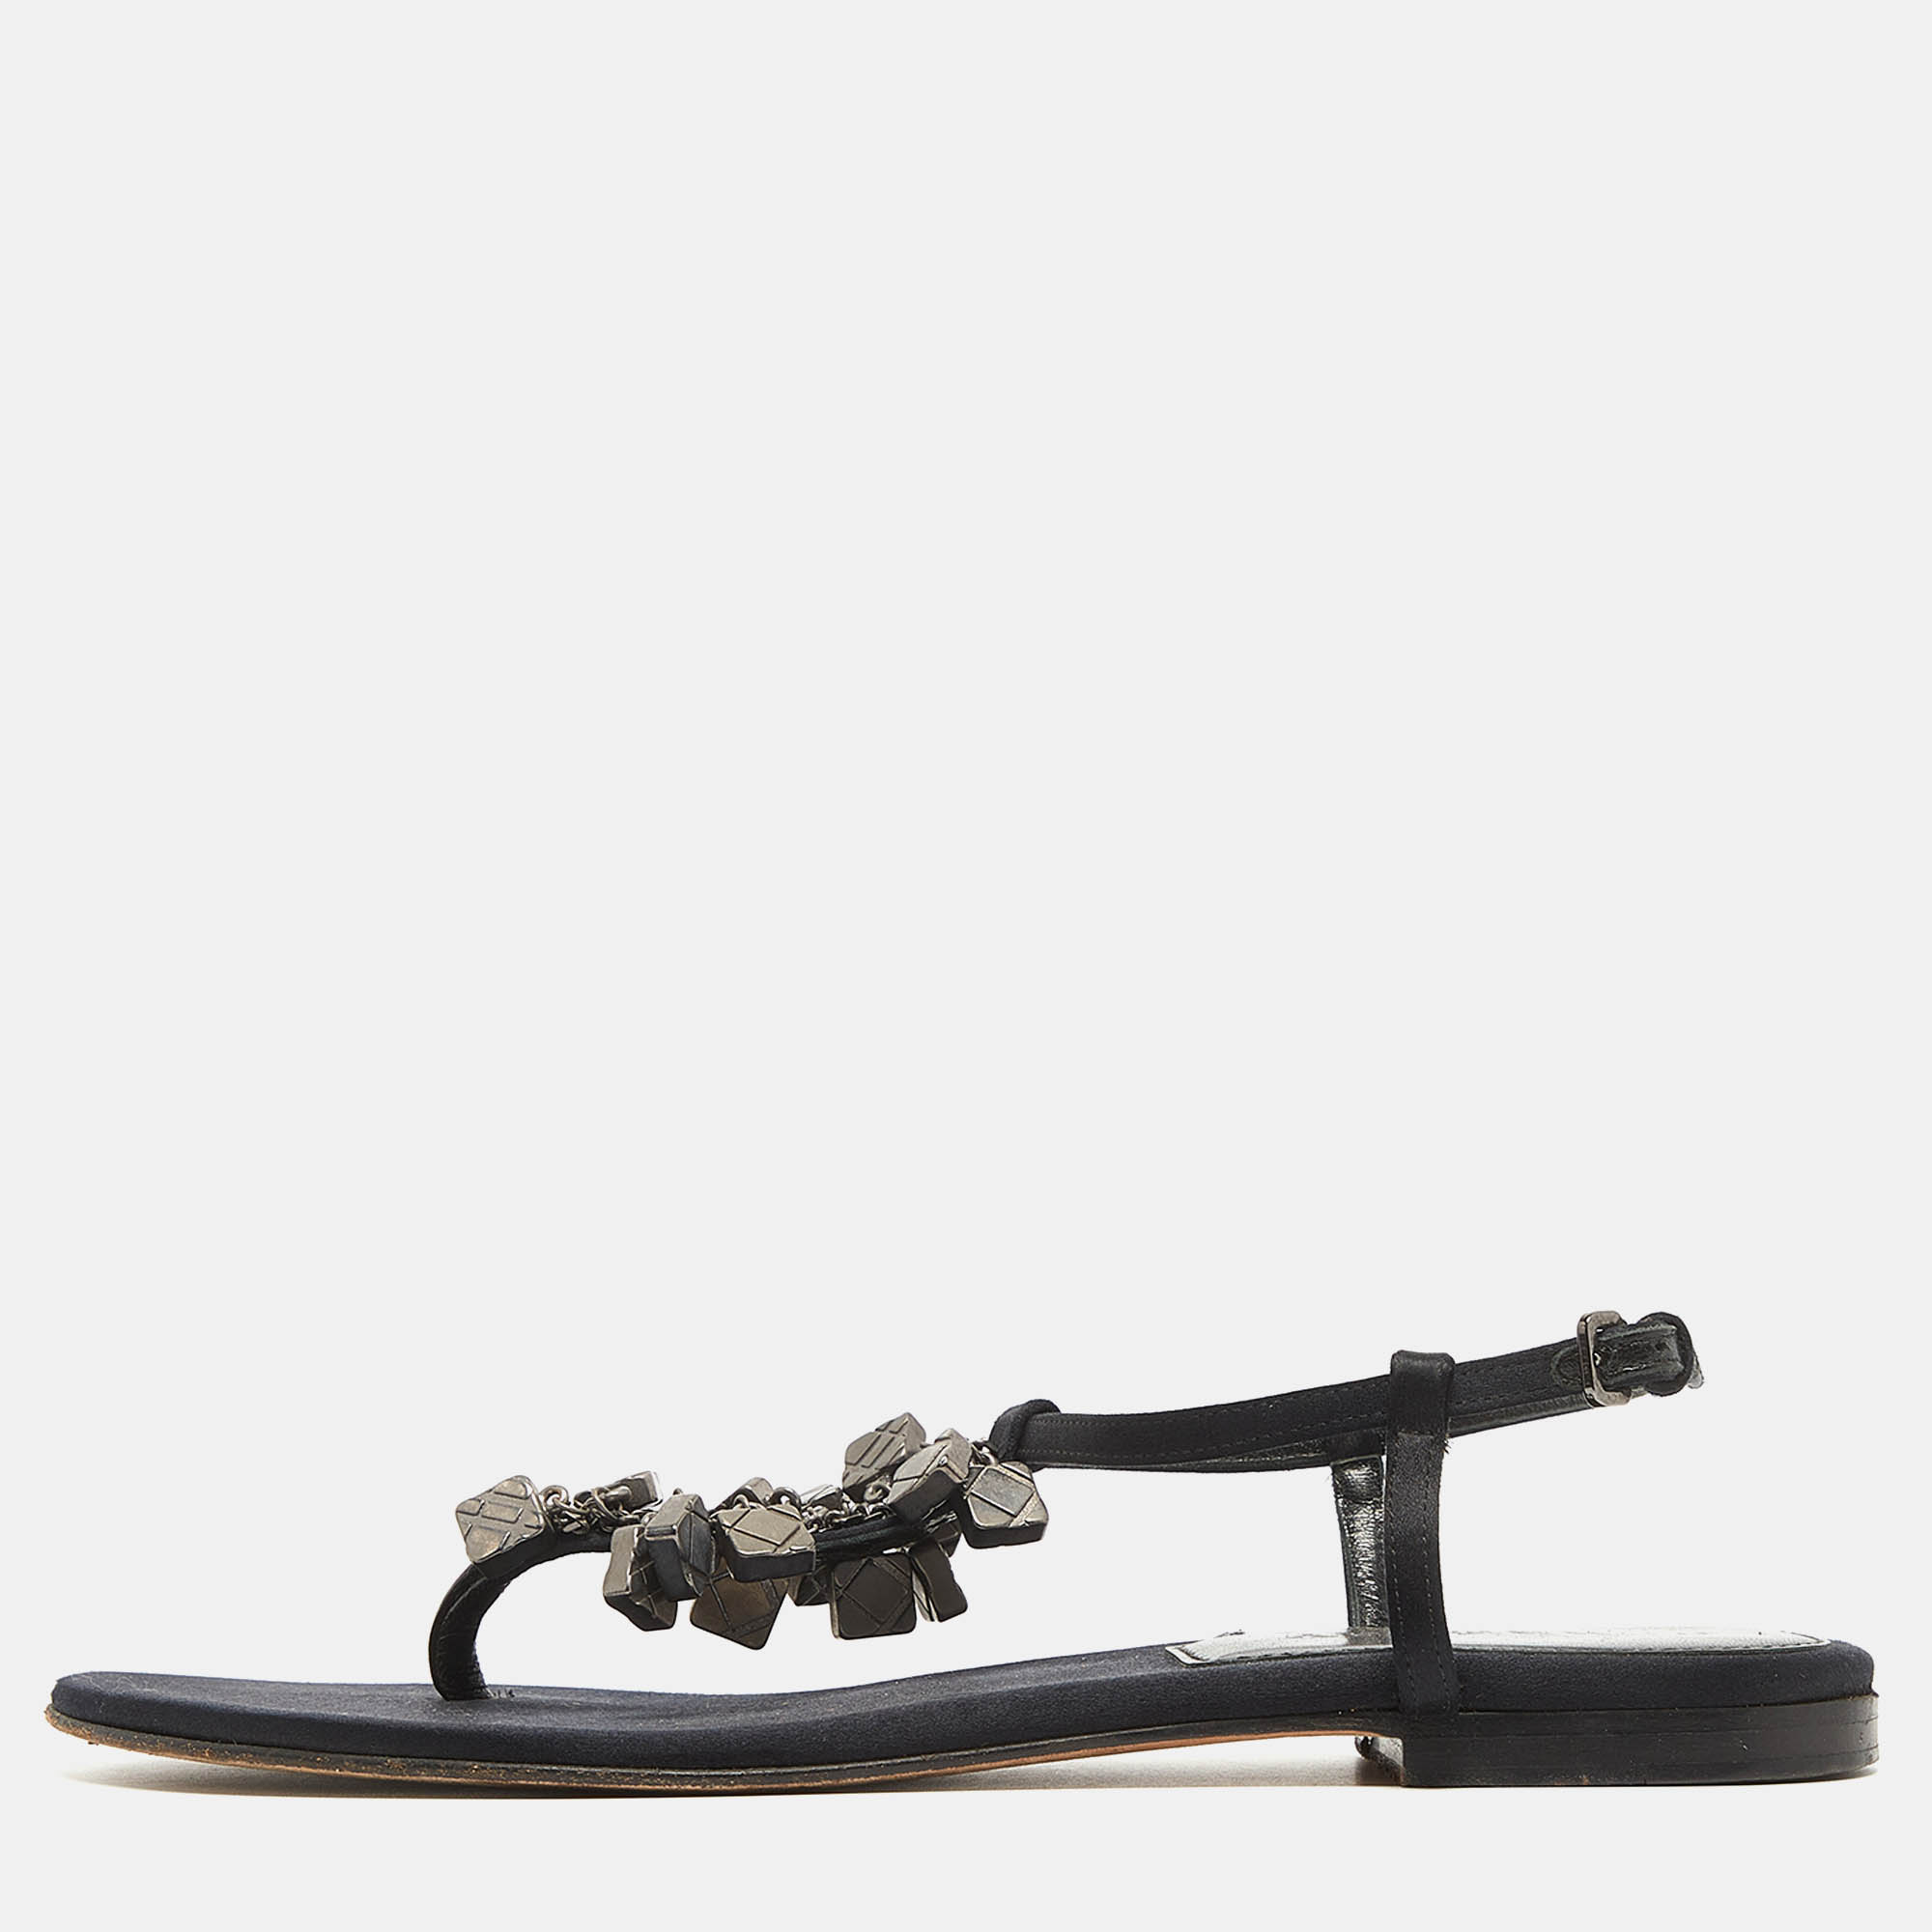 Burberry black satin embellished thong flat sandals size 39